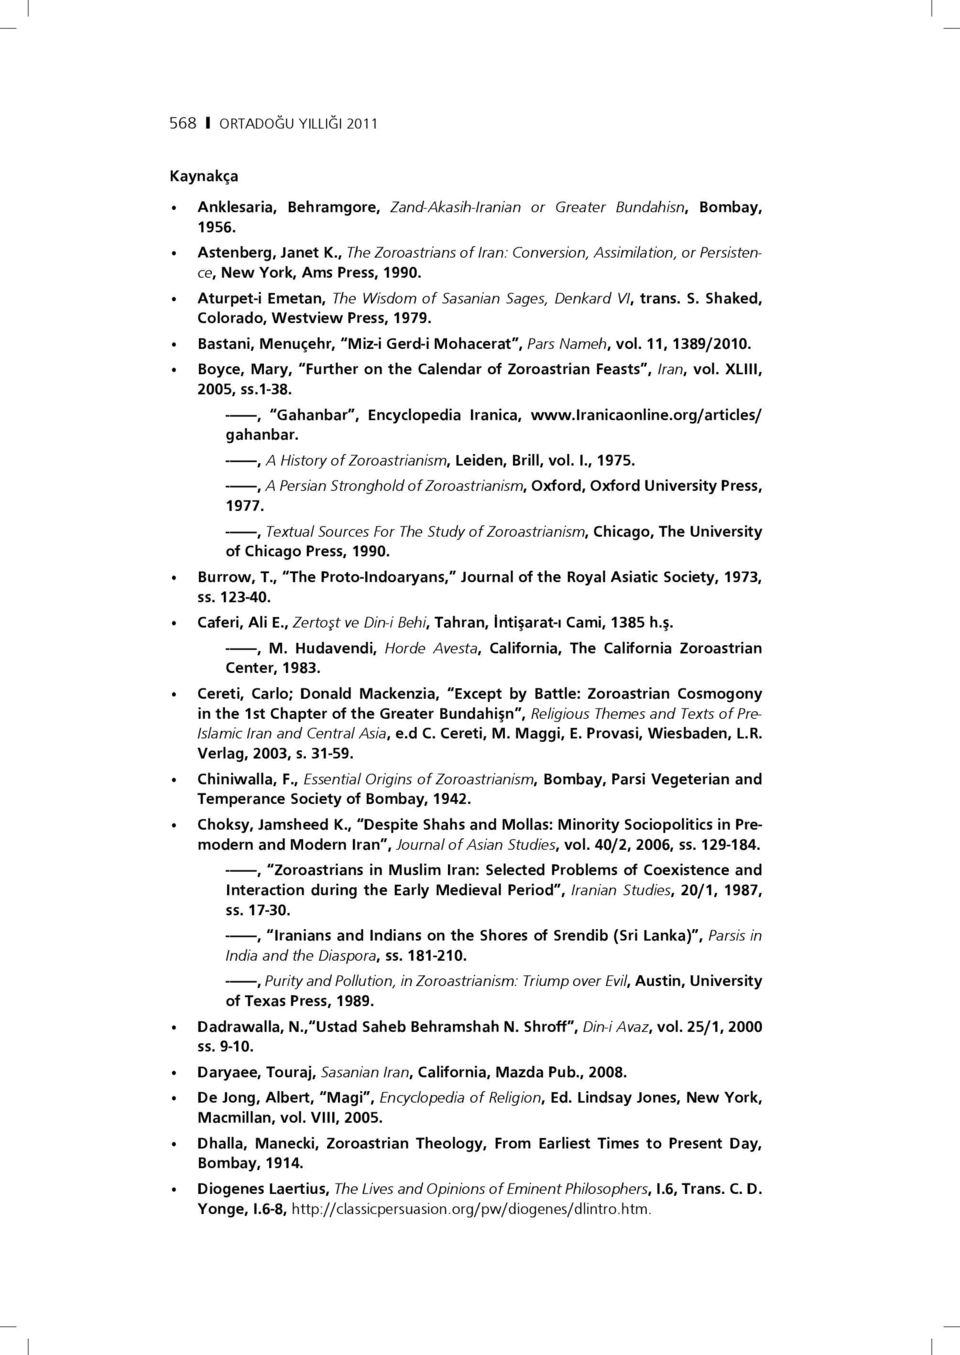 Bastani, Menuçehr, Miz-i Gerd-i Mohacerat, Pars Nameh, vol. 11, 1389/2010. Boyce, Mary, Further on the Calendar of Zoroastrian Feasts, Iran, vol. XLIII, 2005, ss.1-38.